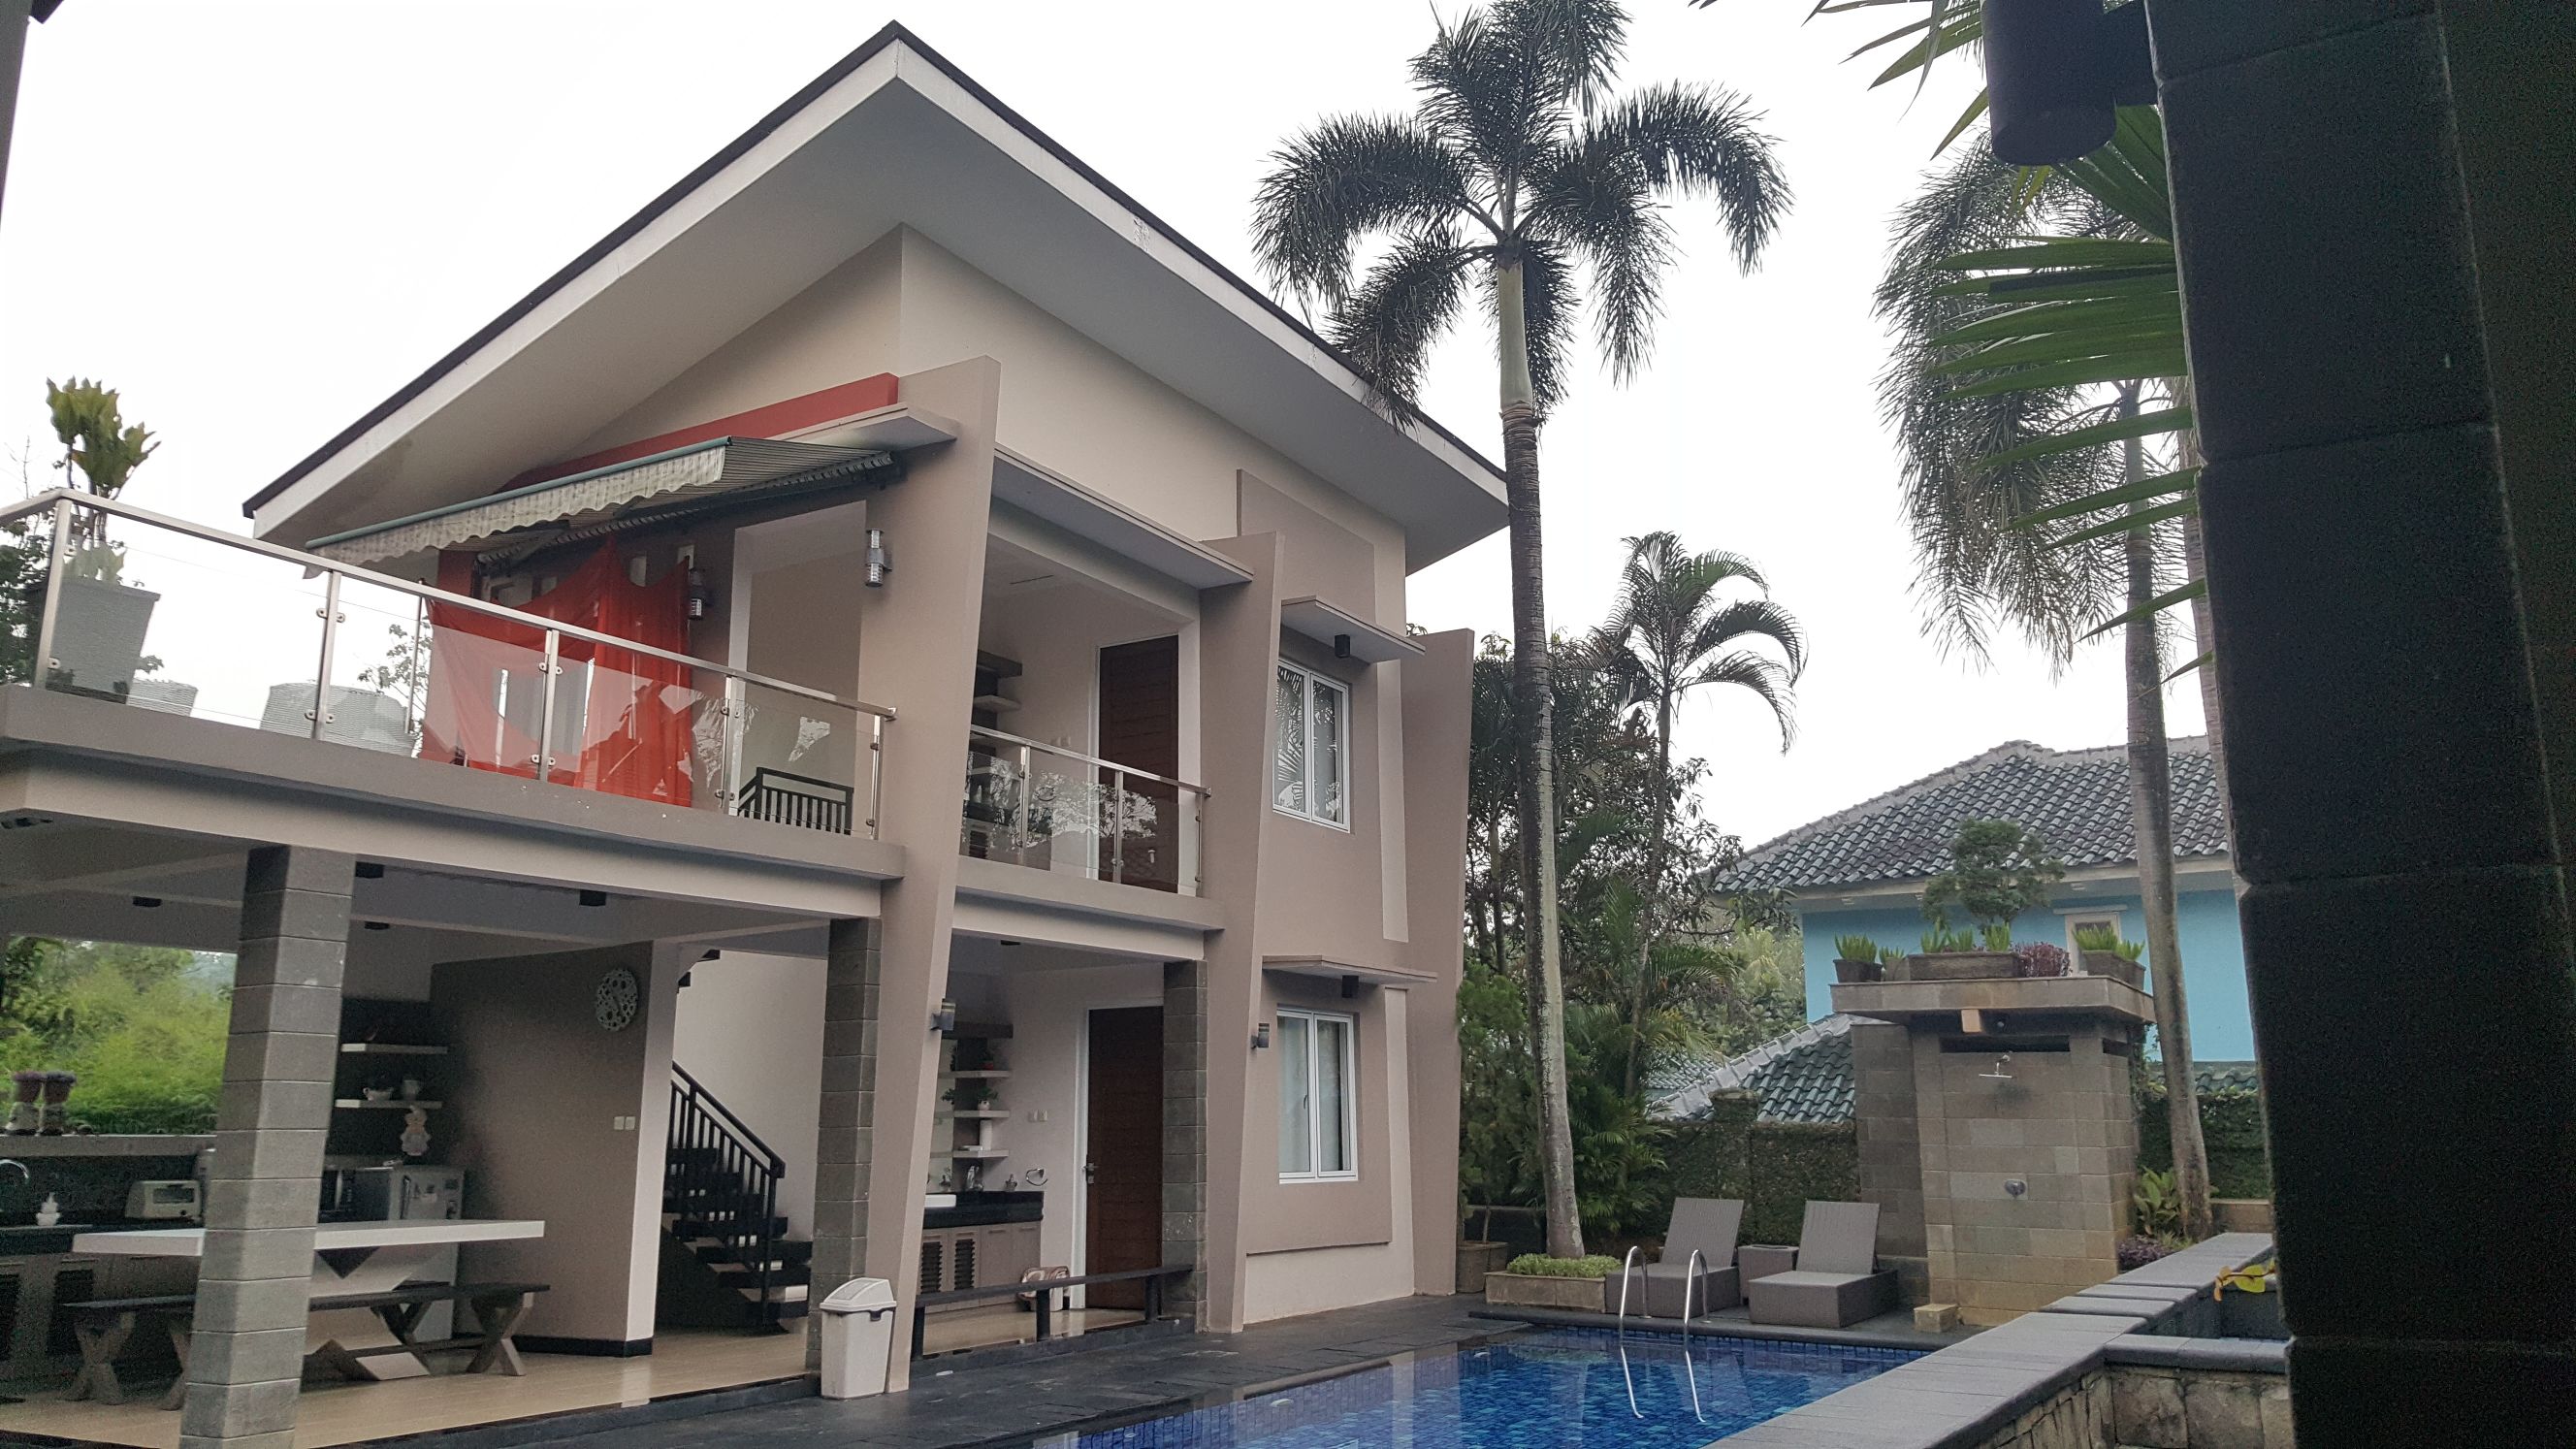 101 Villa, a pool house (2 room) at Sentul Bogor. Rumah kecil untuk